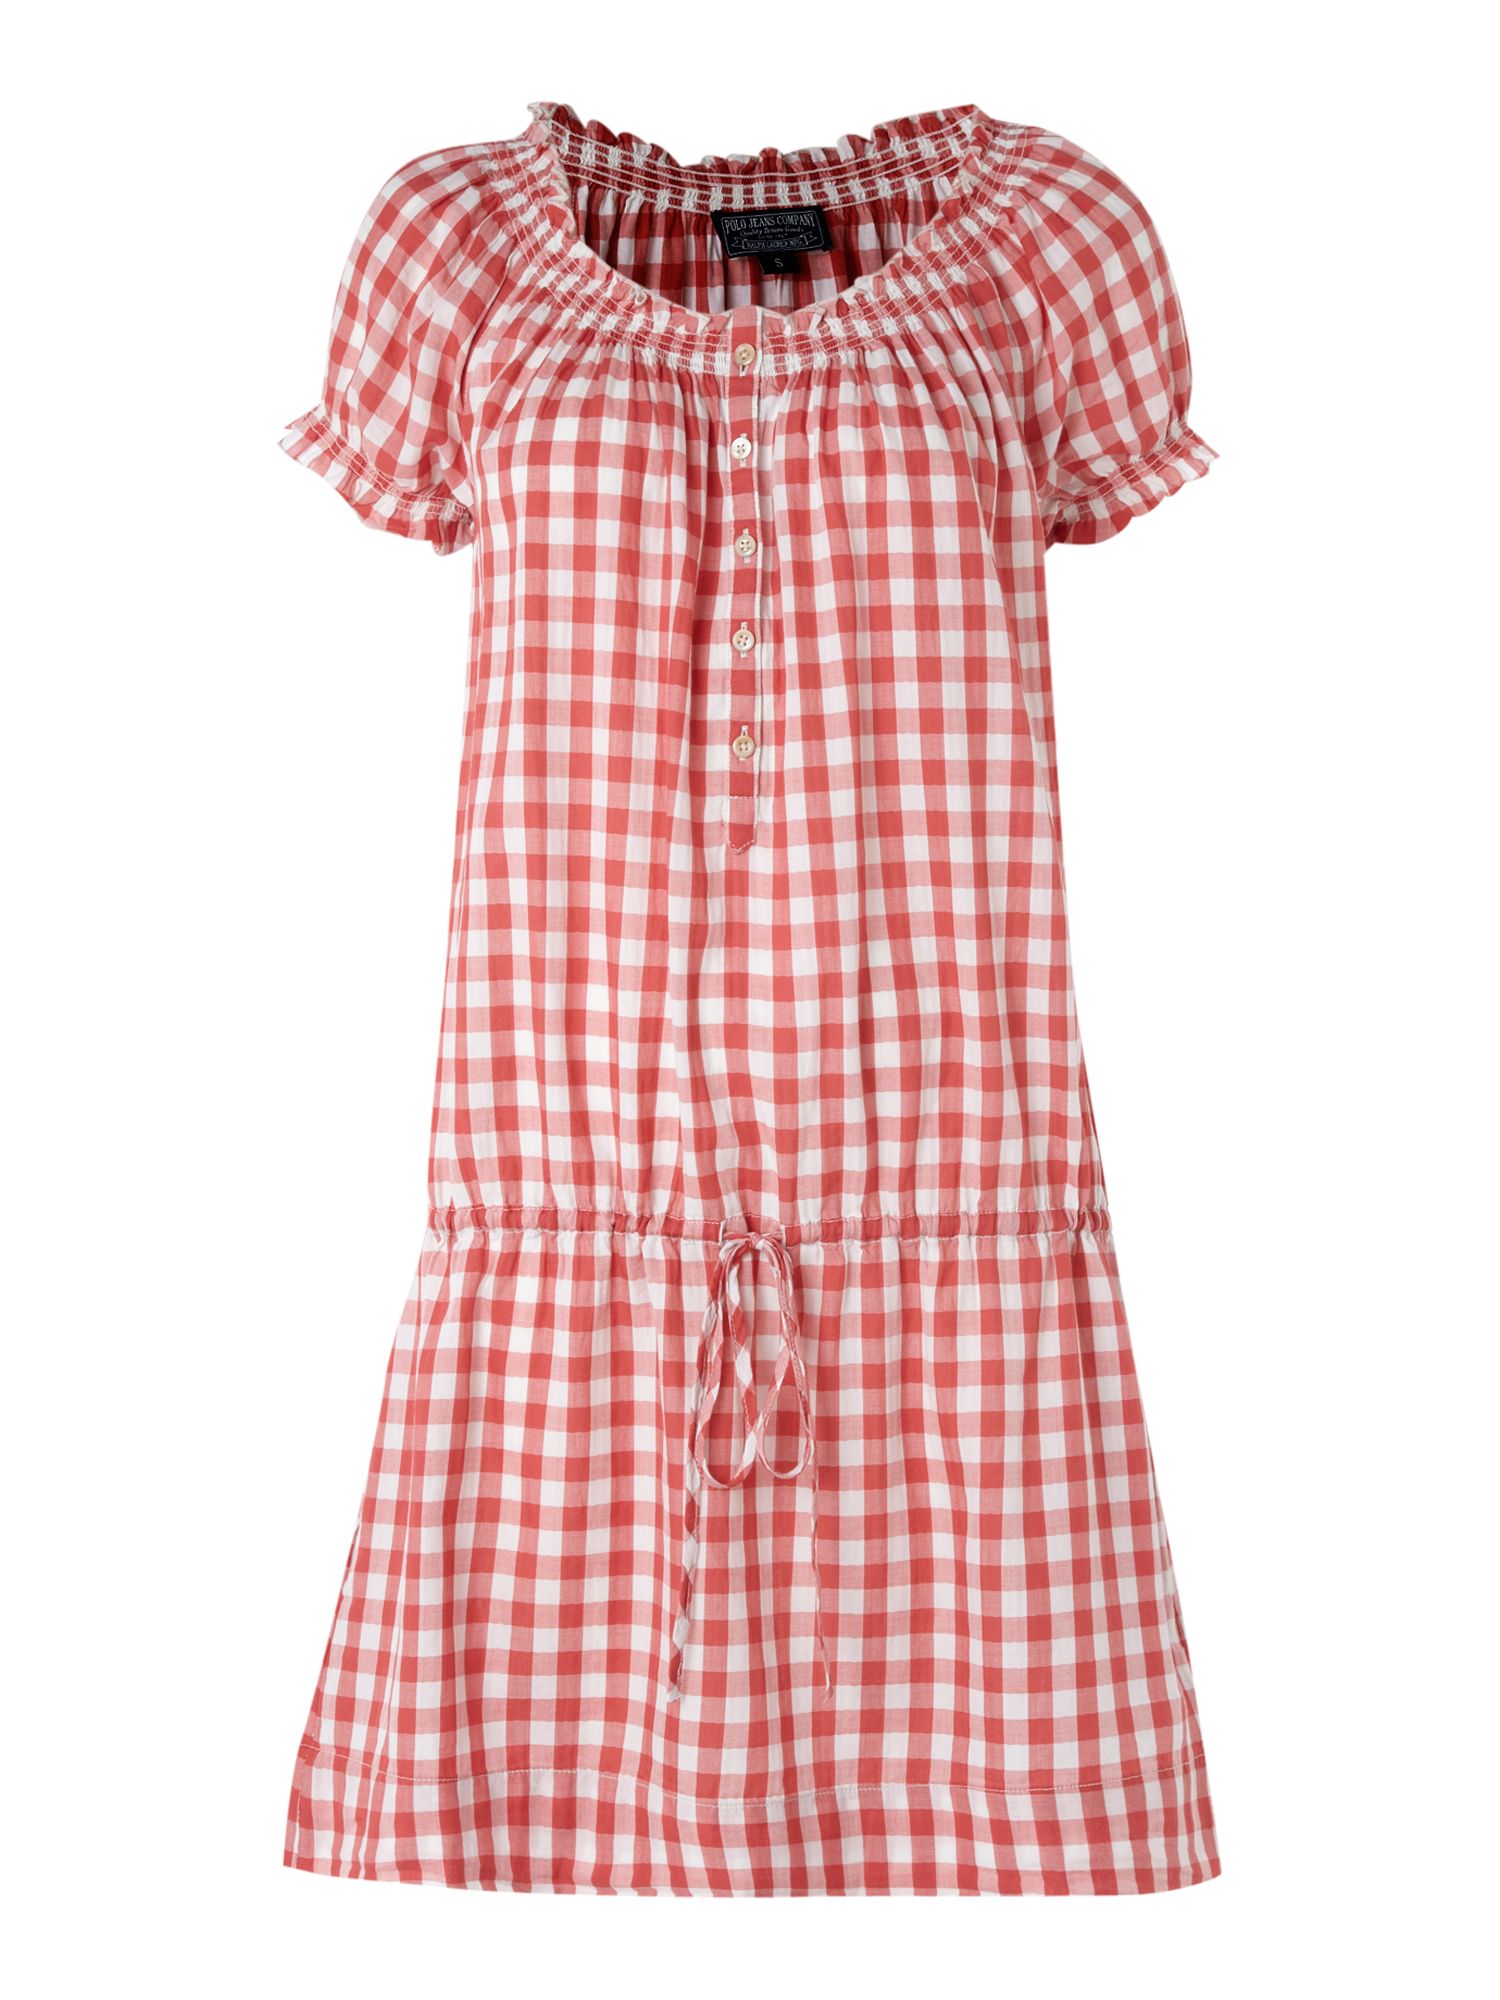 Denim & supply ralph lauren Gingham Short Sleeve Dress in Red | Lyst